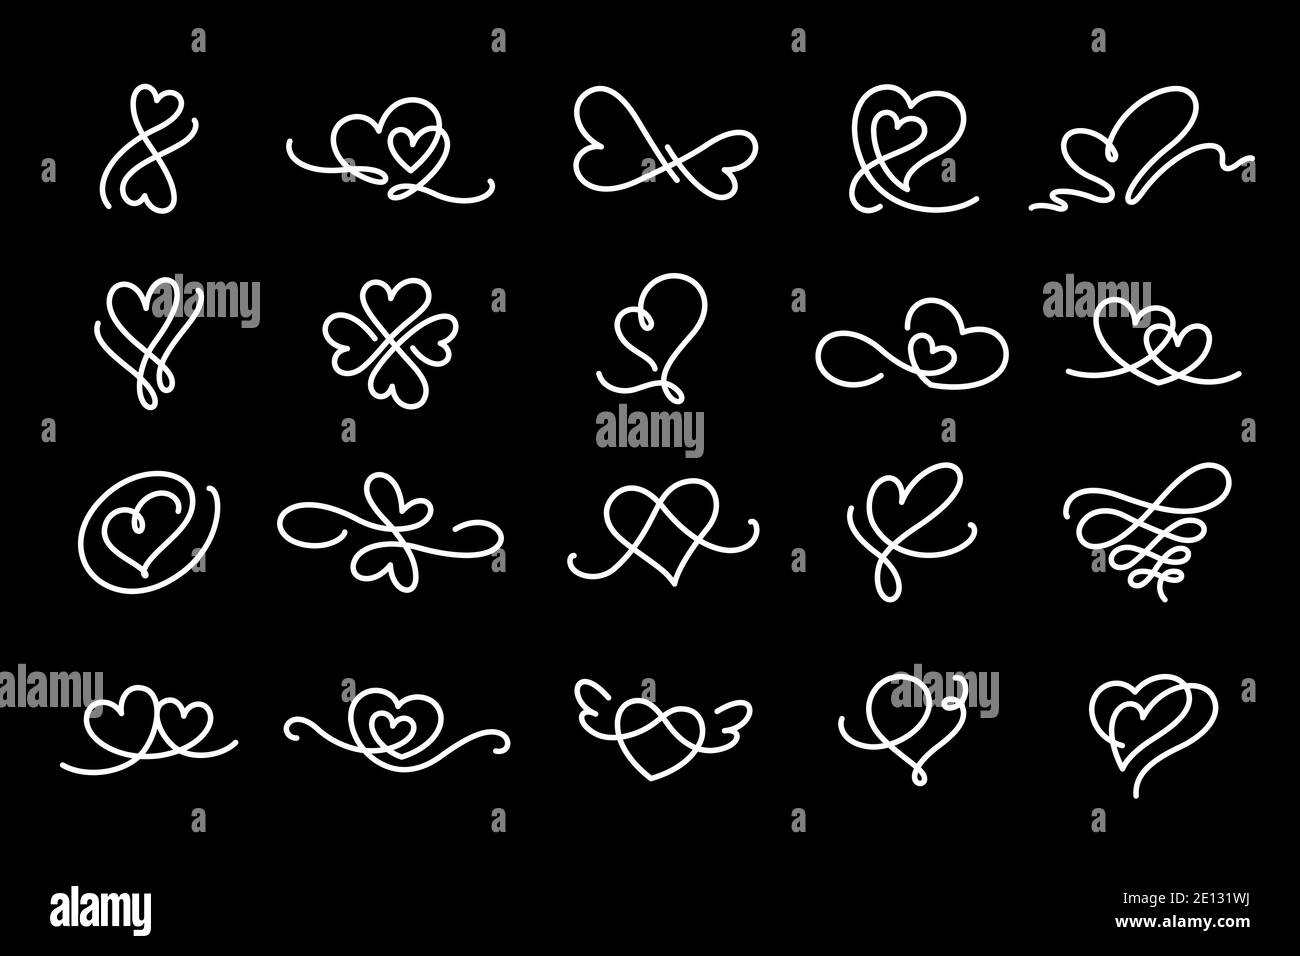 Heart flourish line art sign. Love element decorative hand drawn flourishes,ornate,tattoo. Stock Vector